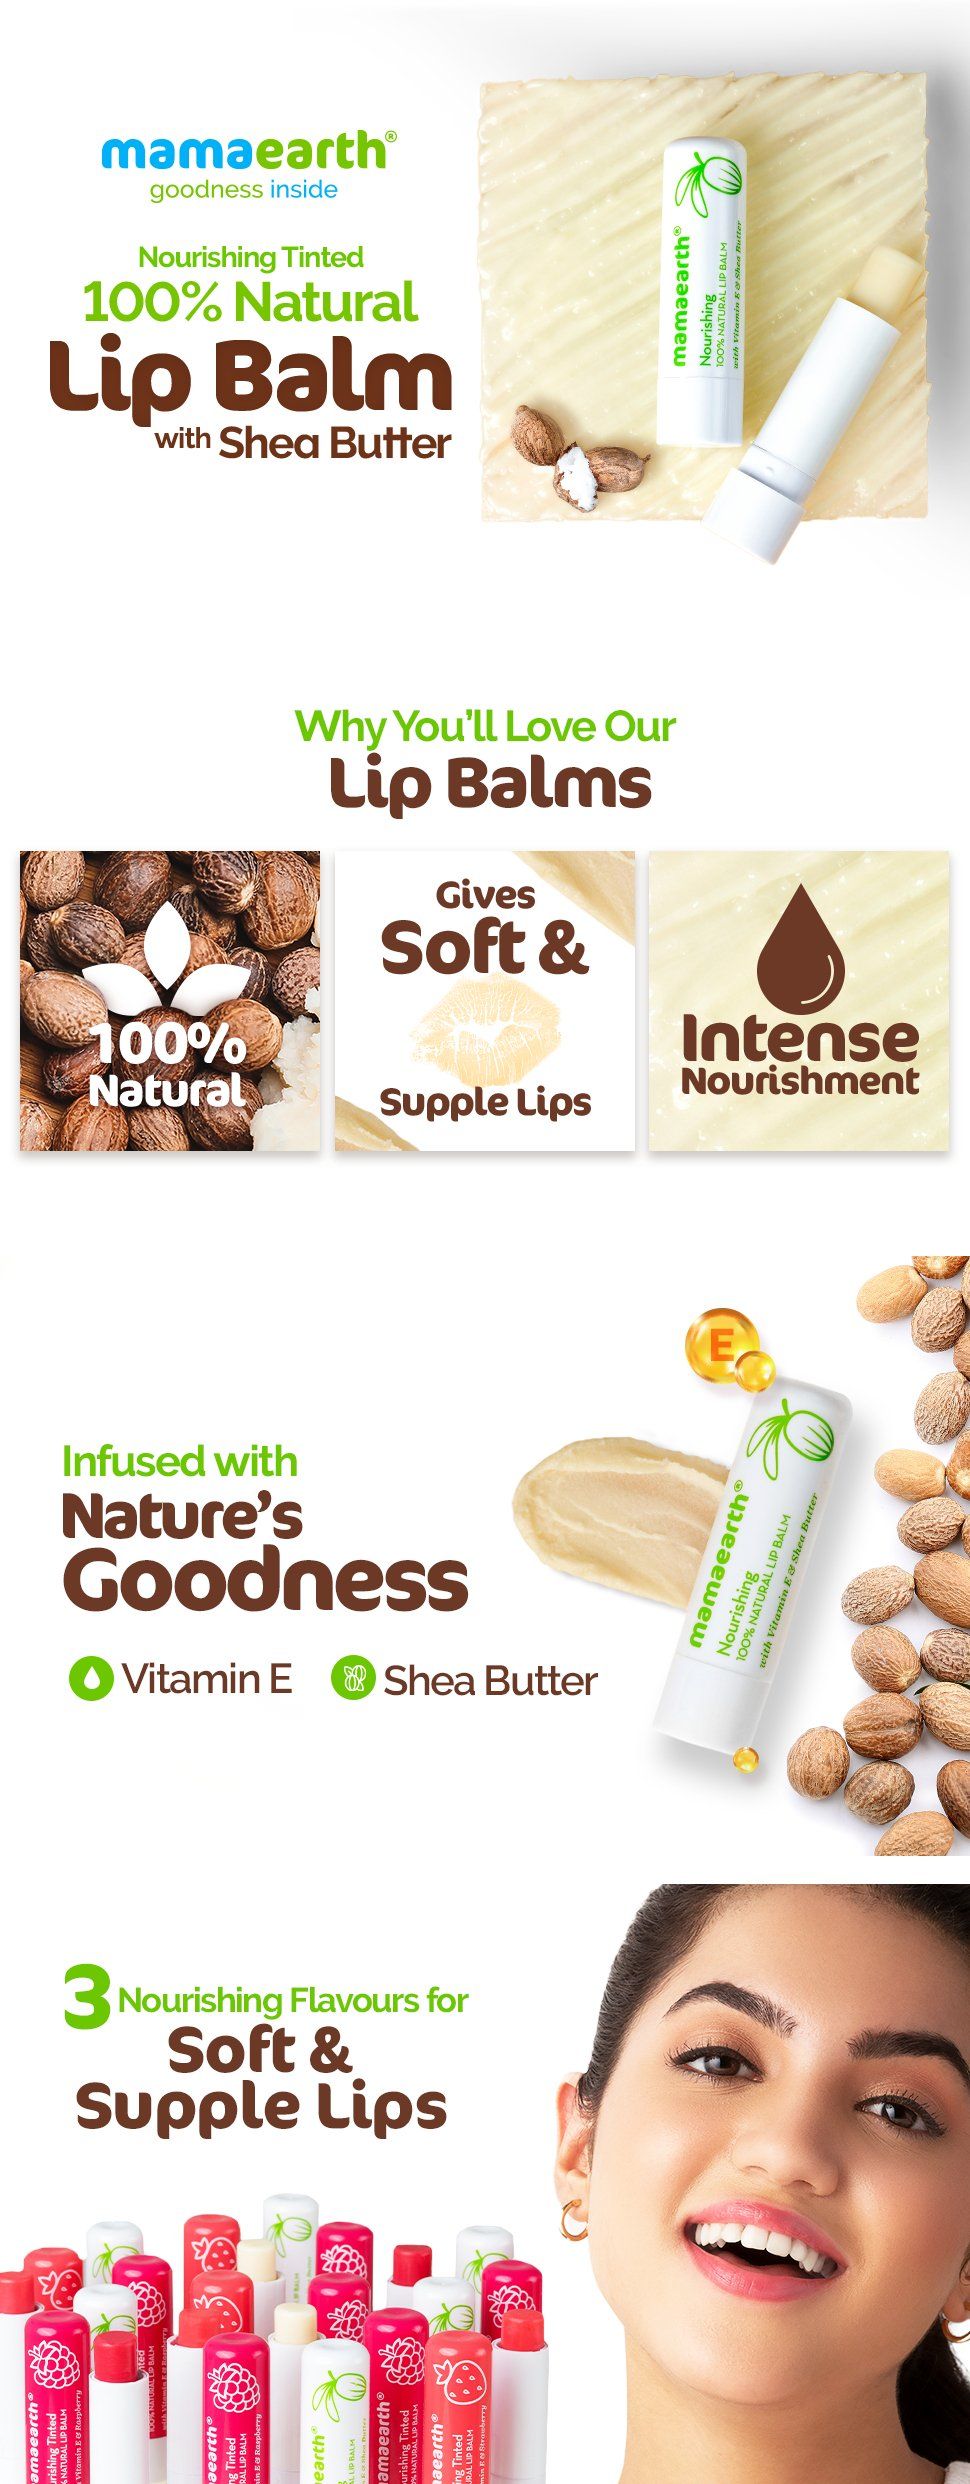 Nourishing 100% Natural Lip Balm with Vitamin E and Shea Butter